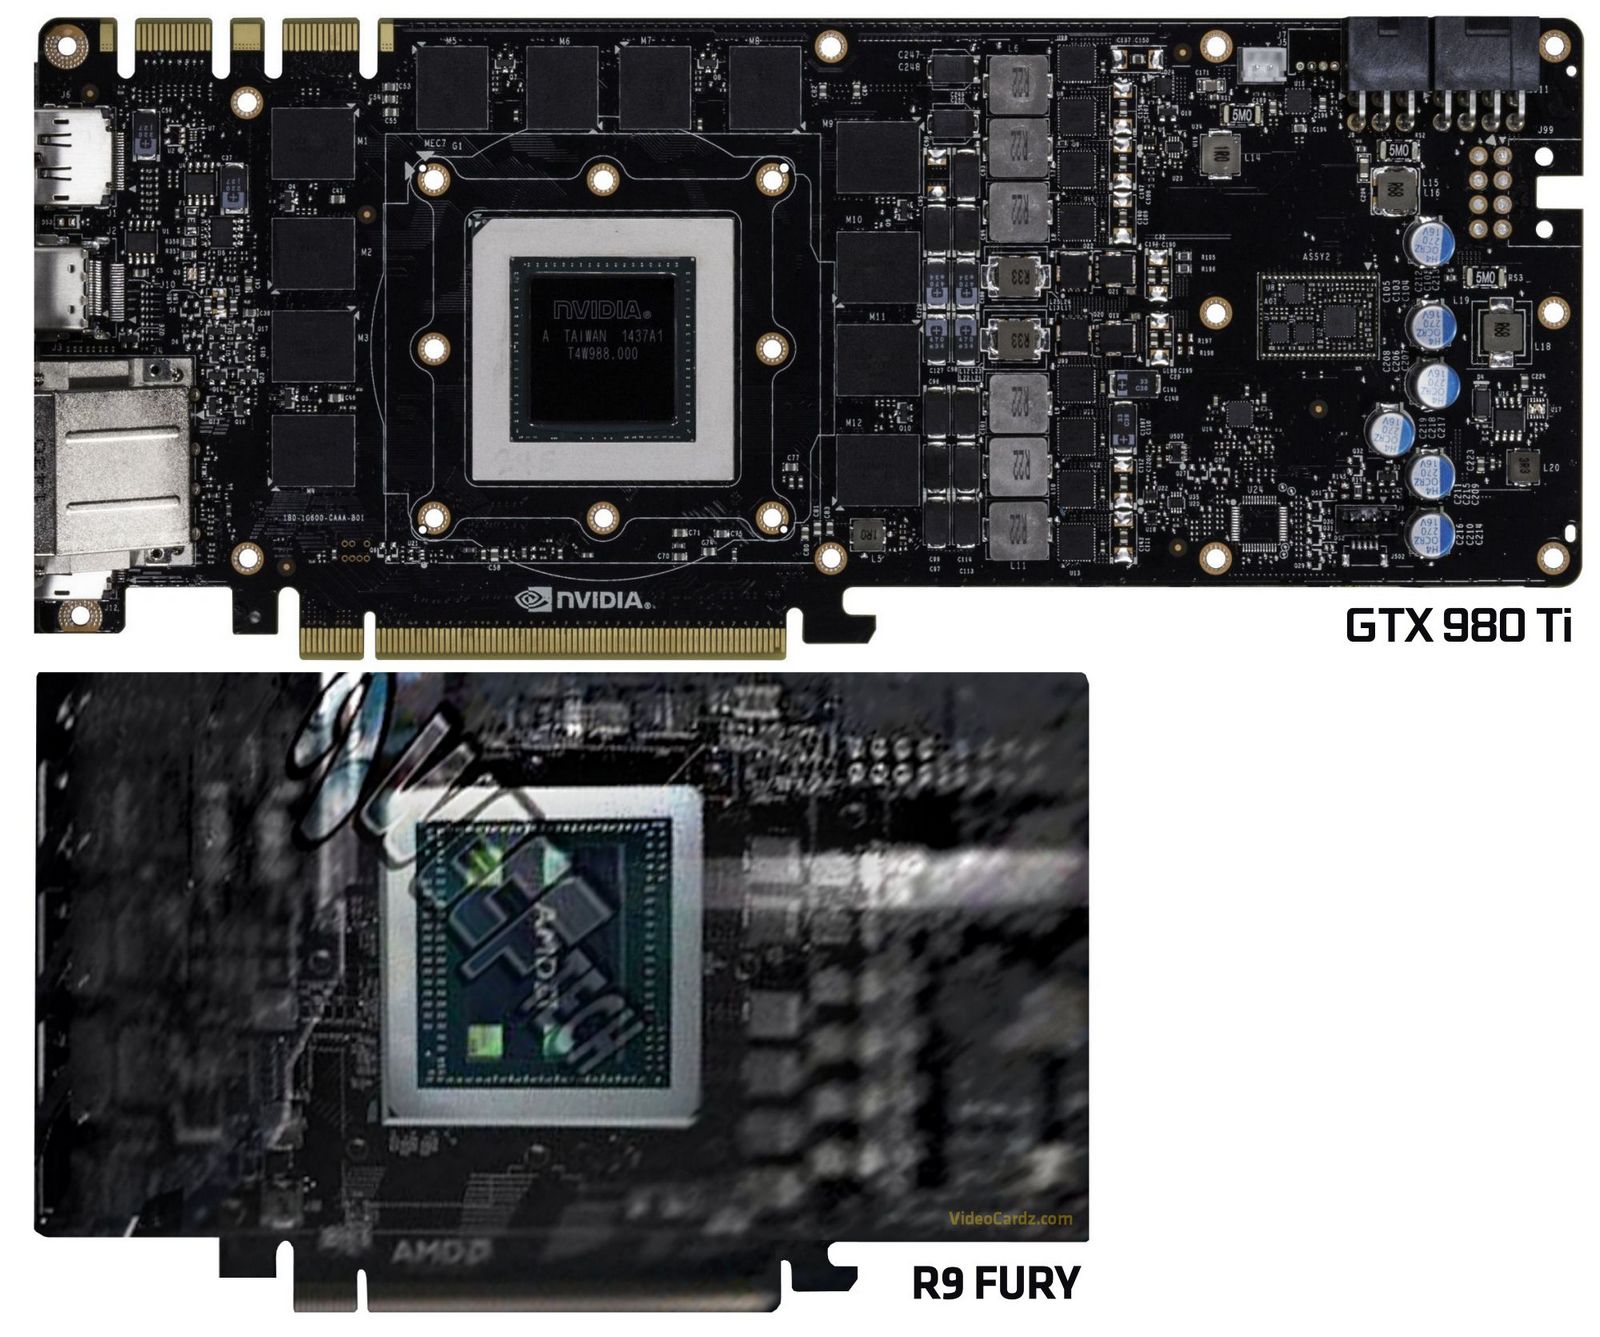 AMD-R9-FURY-vs-GTX-980-Ti-PCB-comparison.jpg